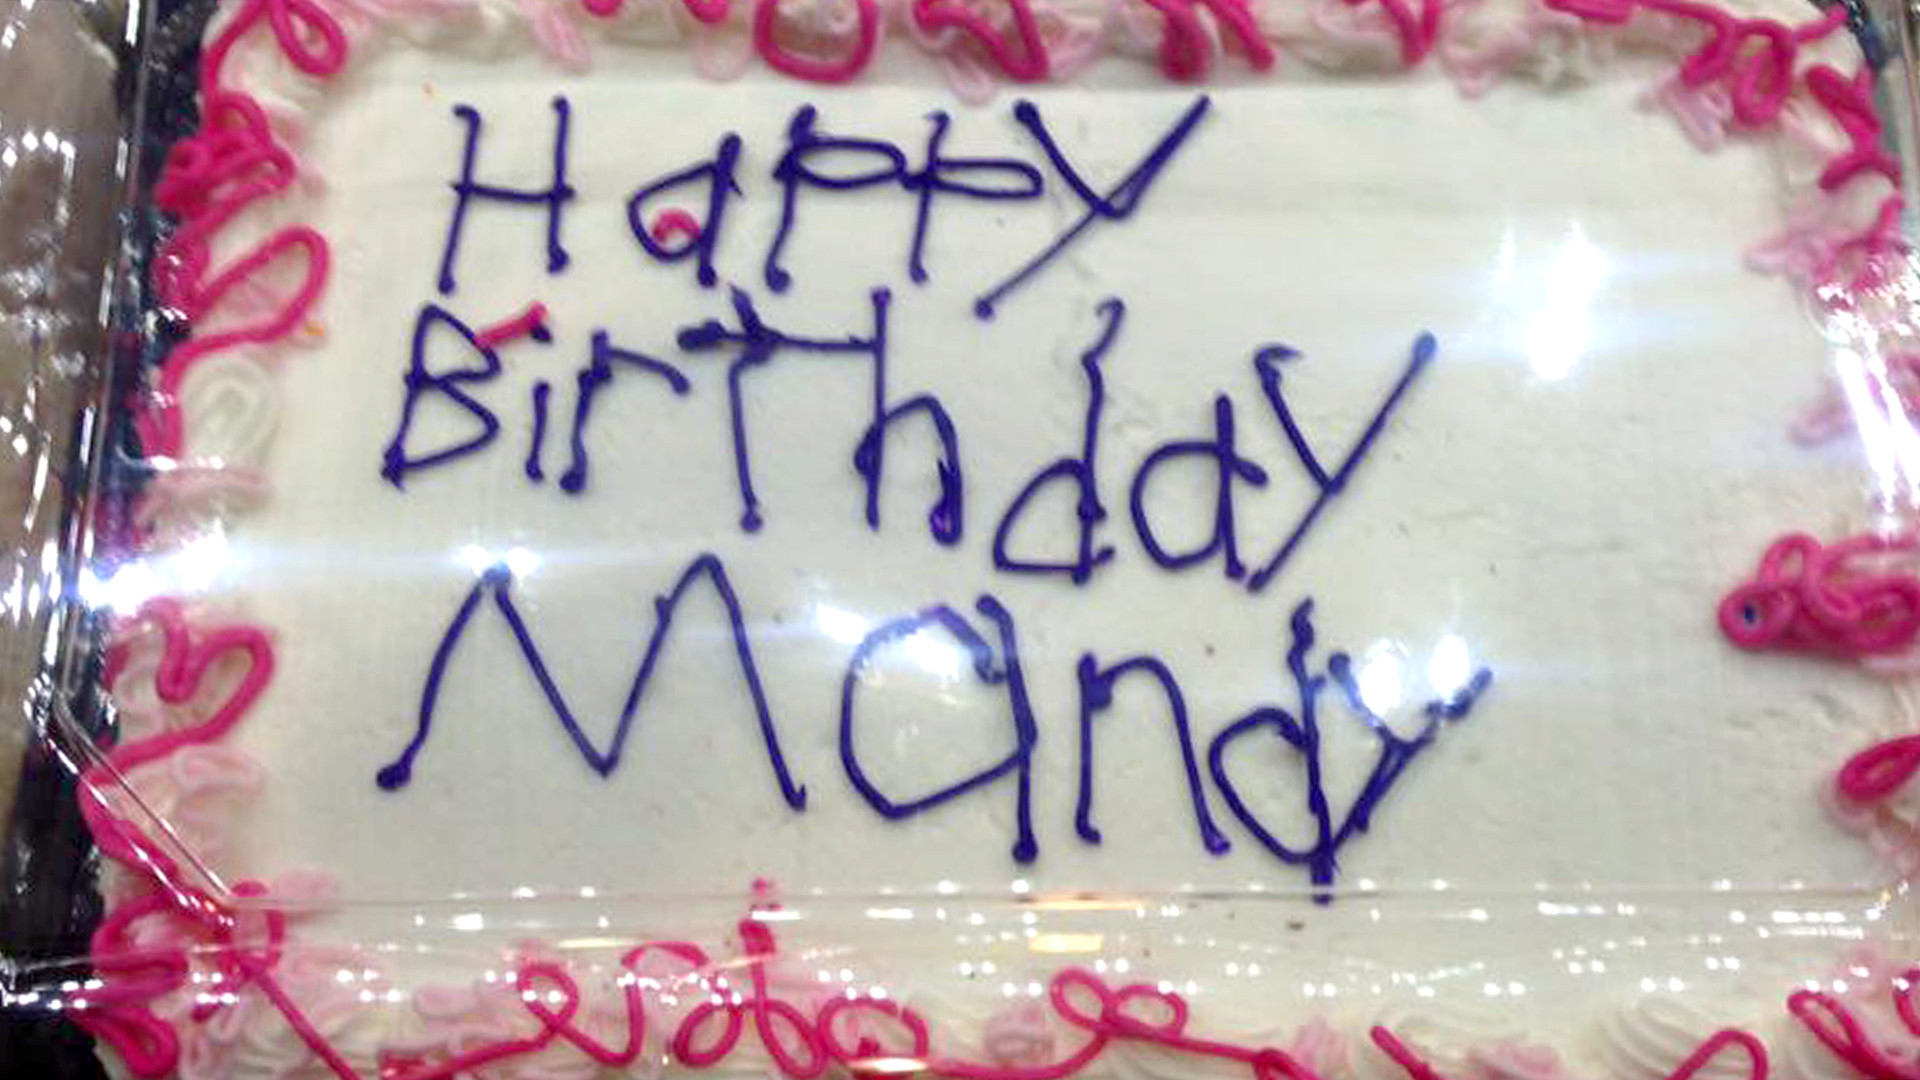 Meijer Birthday Cakes
 Heartwarming story behind Meijer bought birthday cake